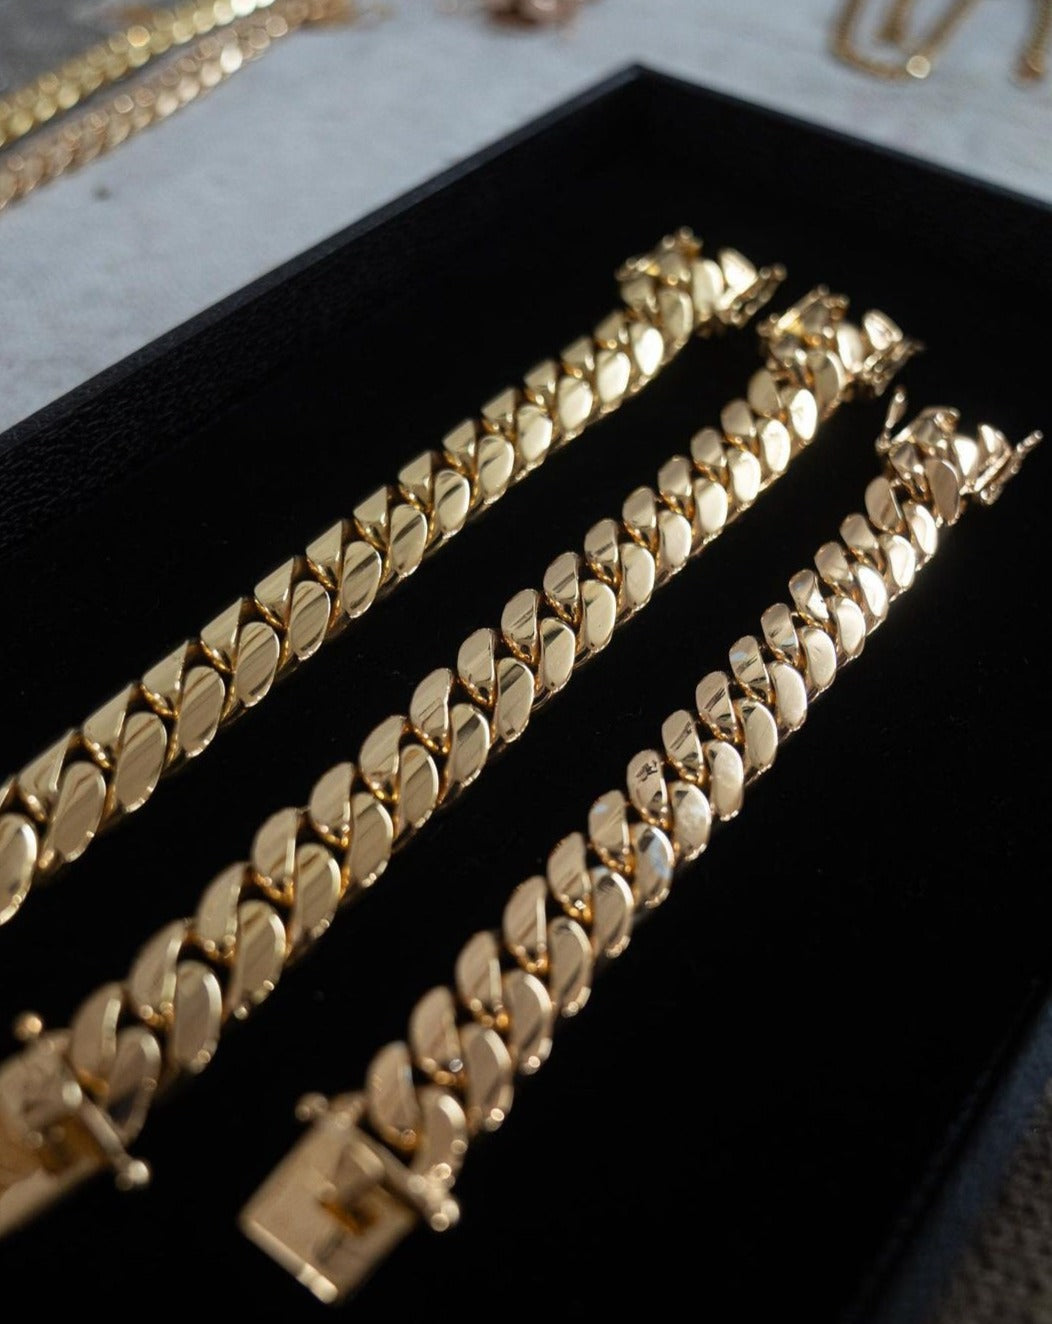 Yellow Gold Herringbone Chain Men's Bracelet 8